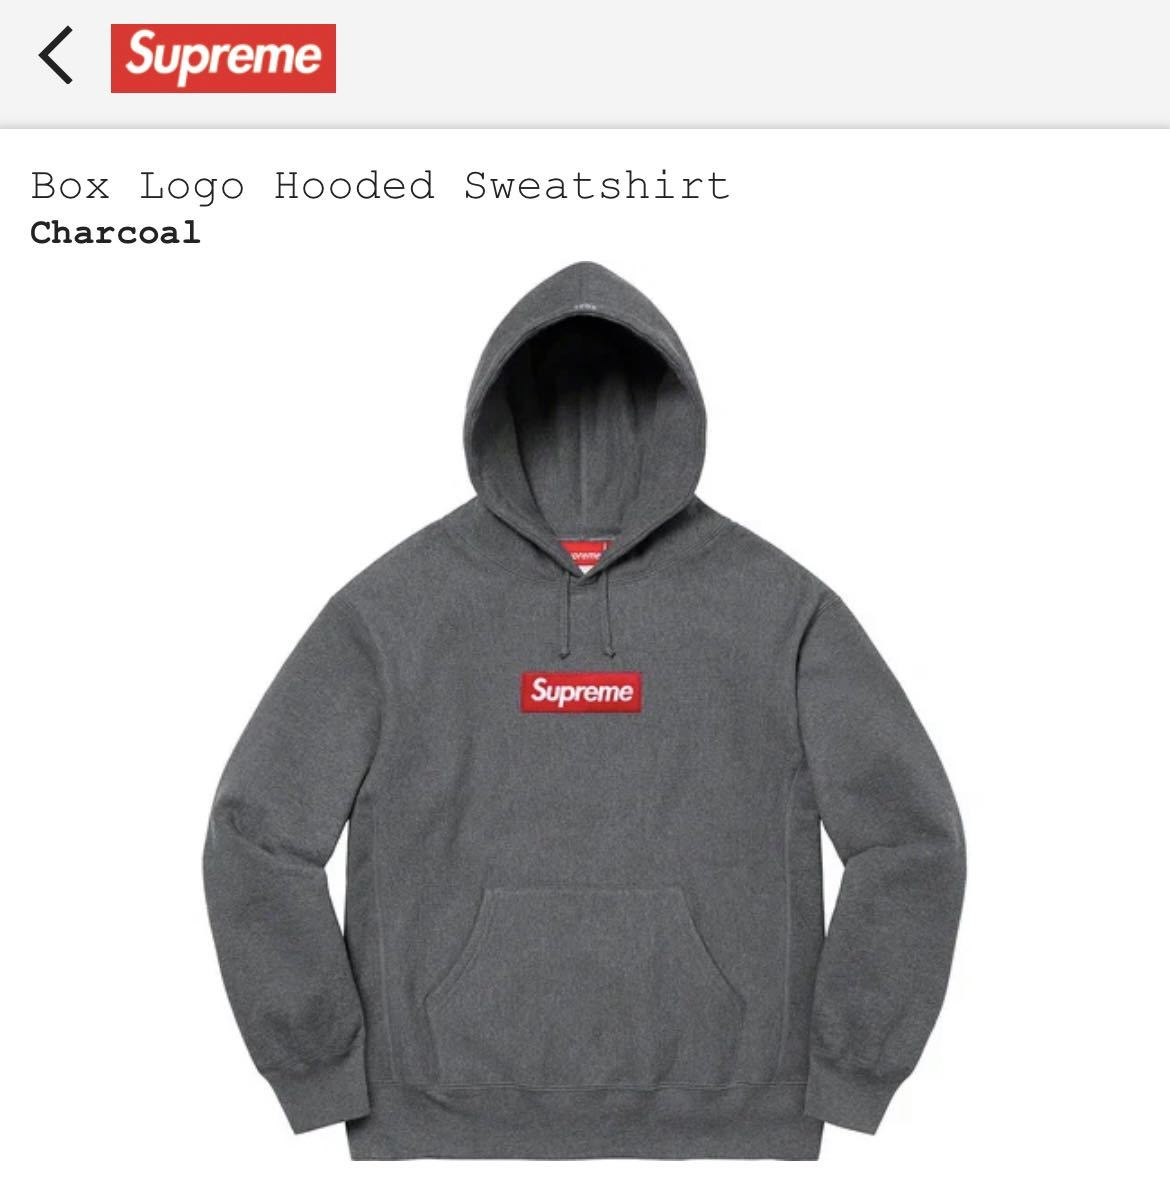 XLサイズ Supreme Box Logo Hooded Sweatshirt Charcoal シュプリーム